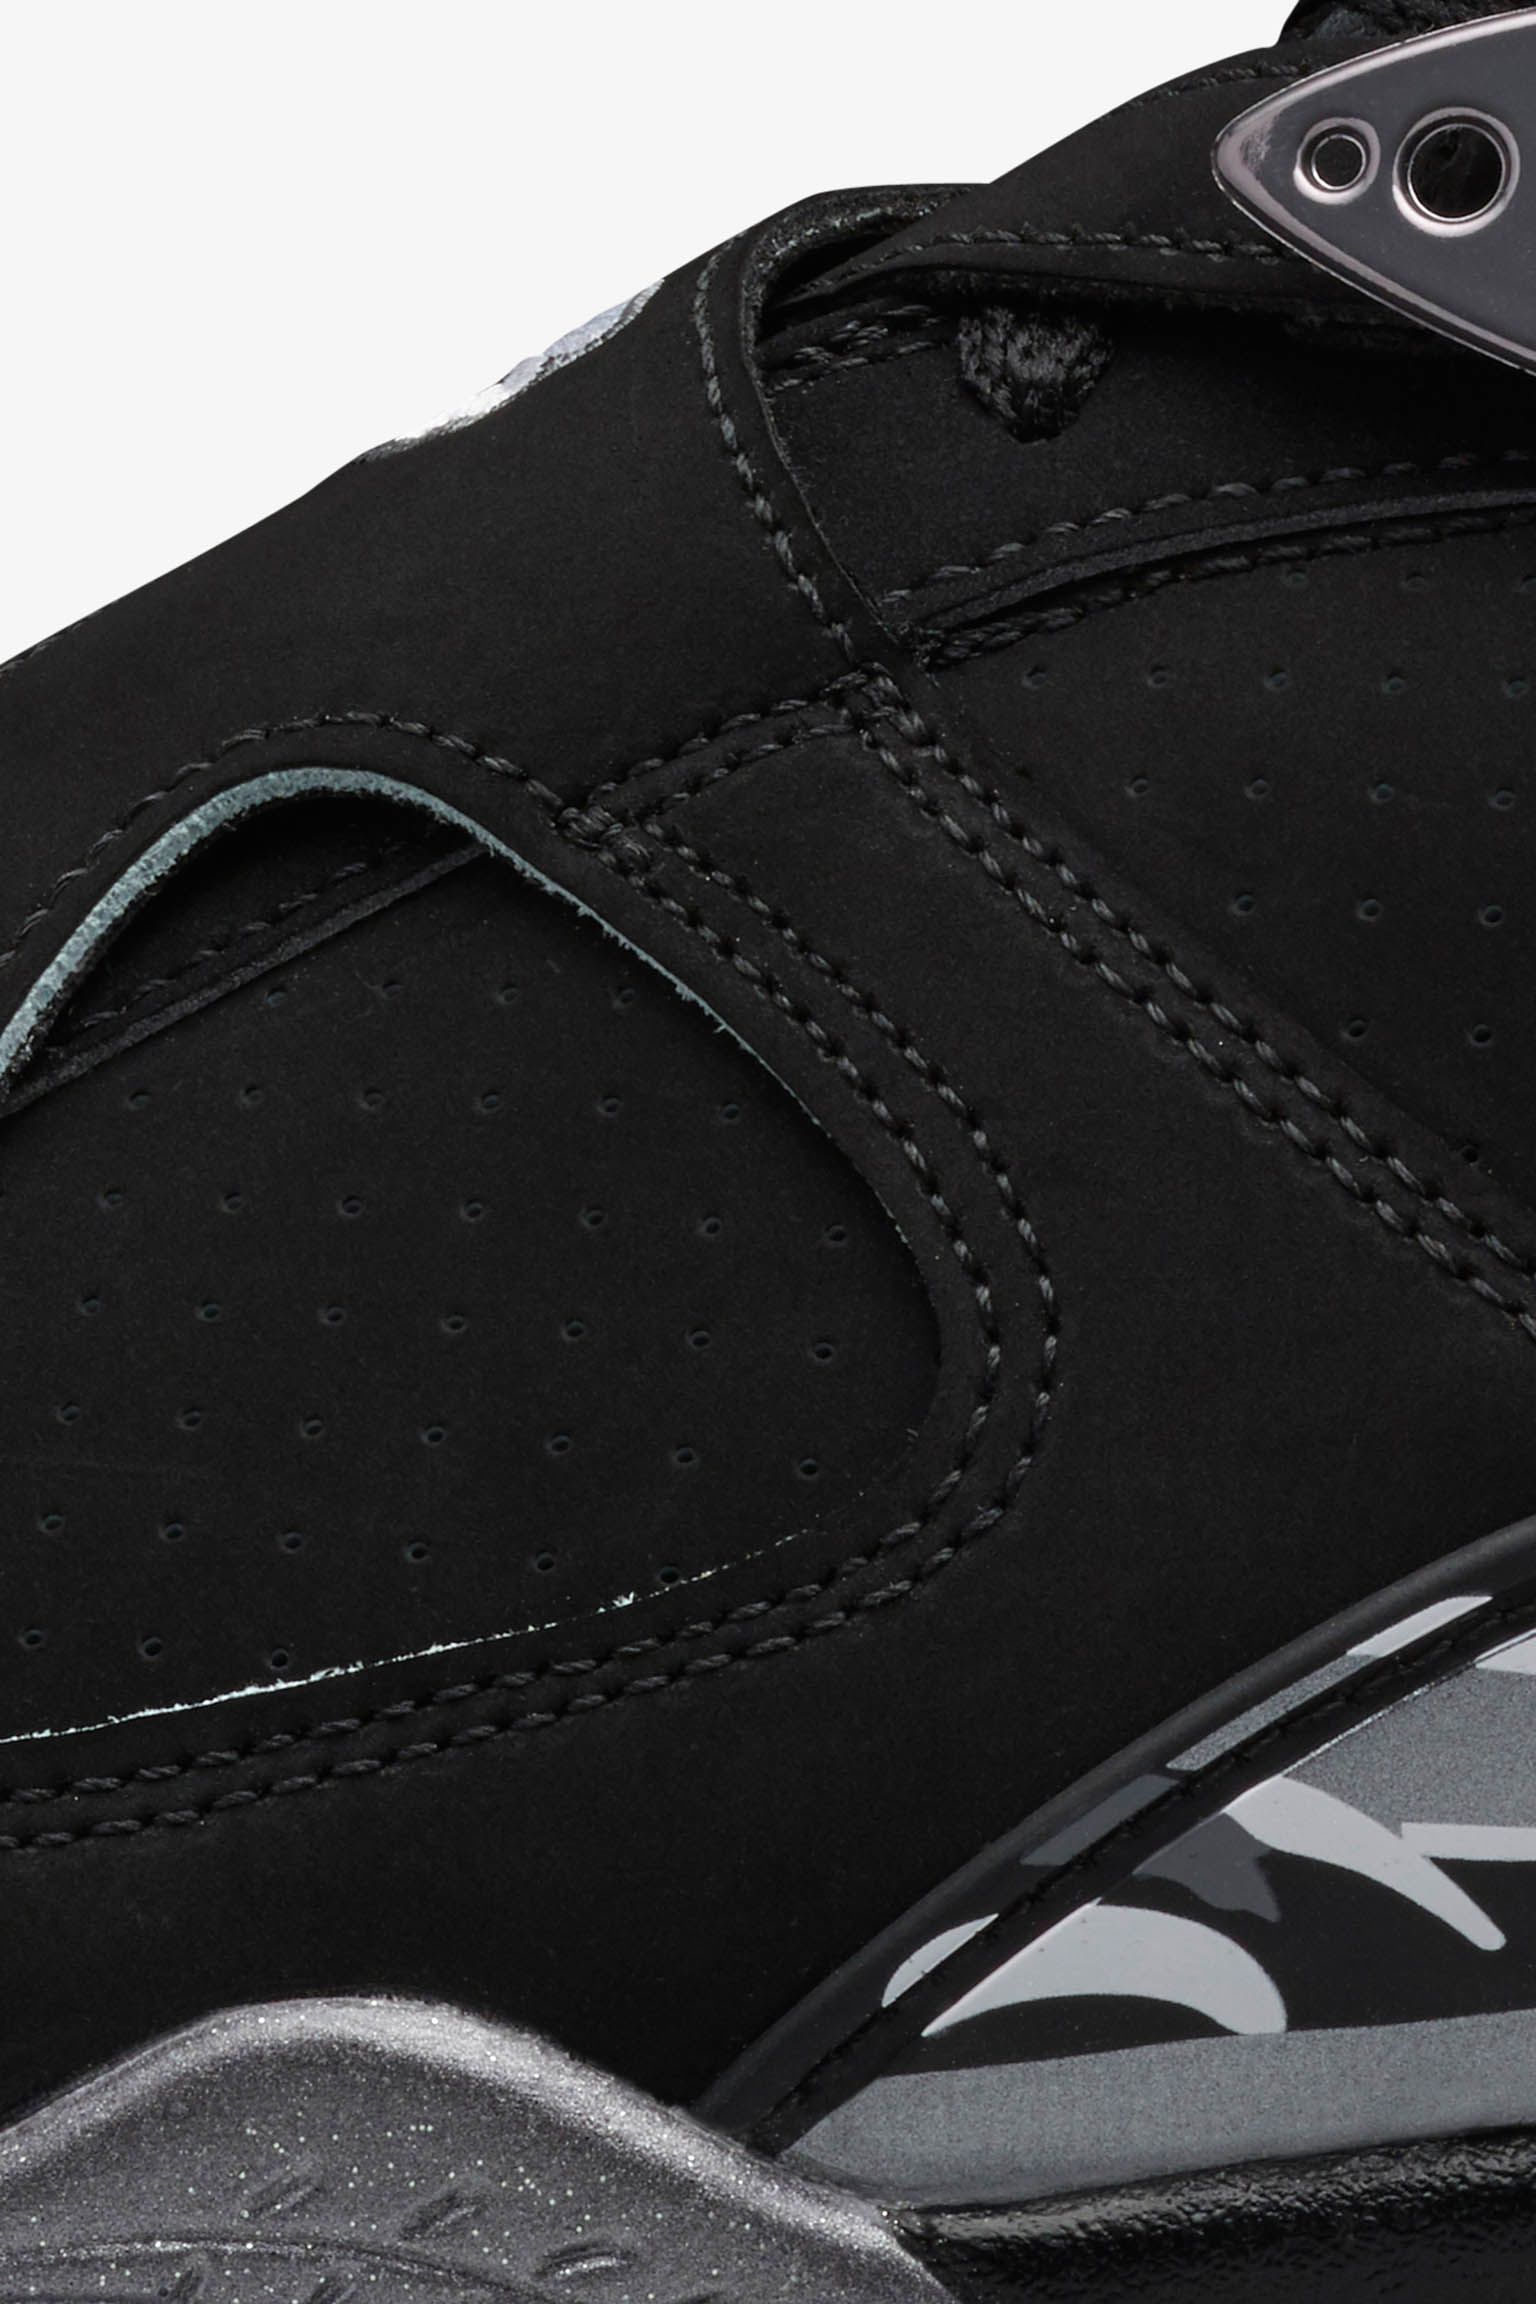 Sneaker Con Chicago 2015 - Air Jordan Photo Recap - Air Jordans, Release  Dates & More | JordansDaily.com